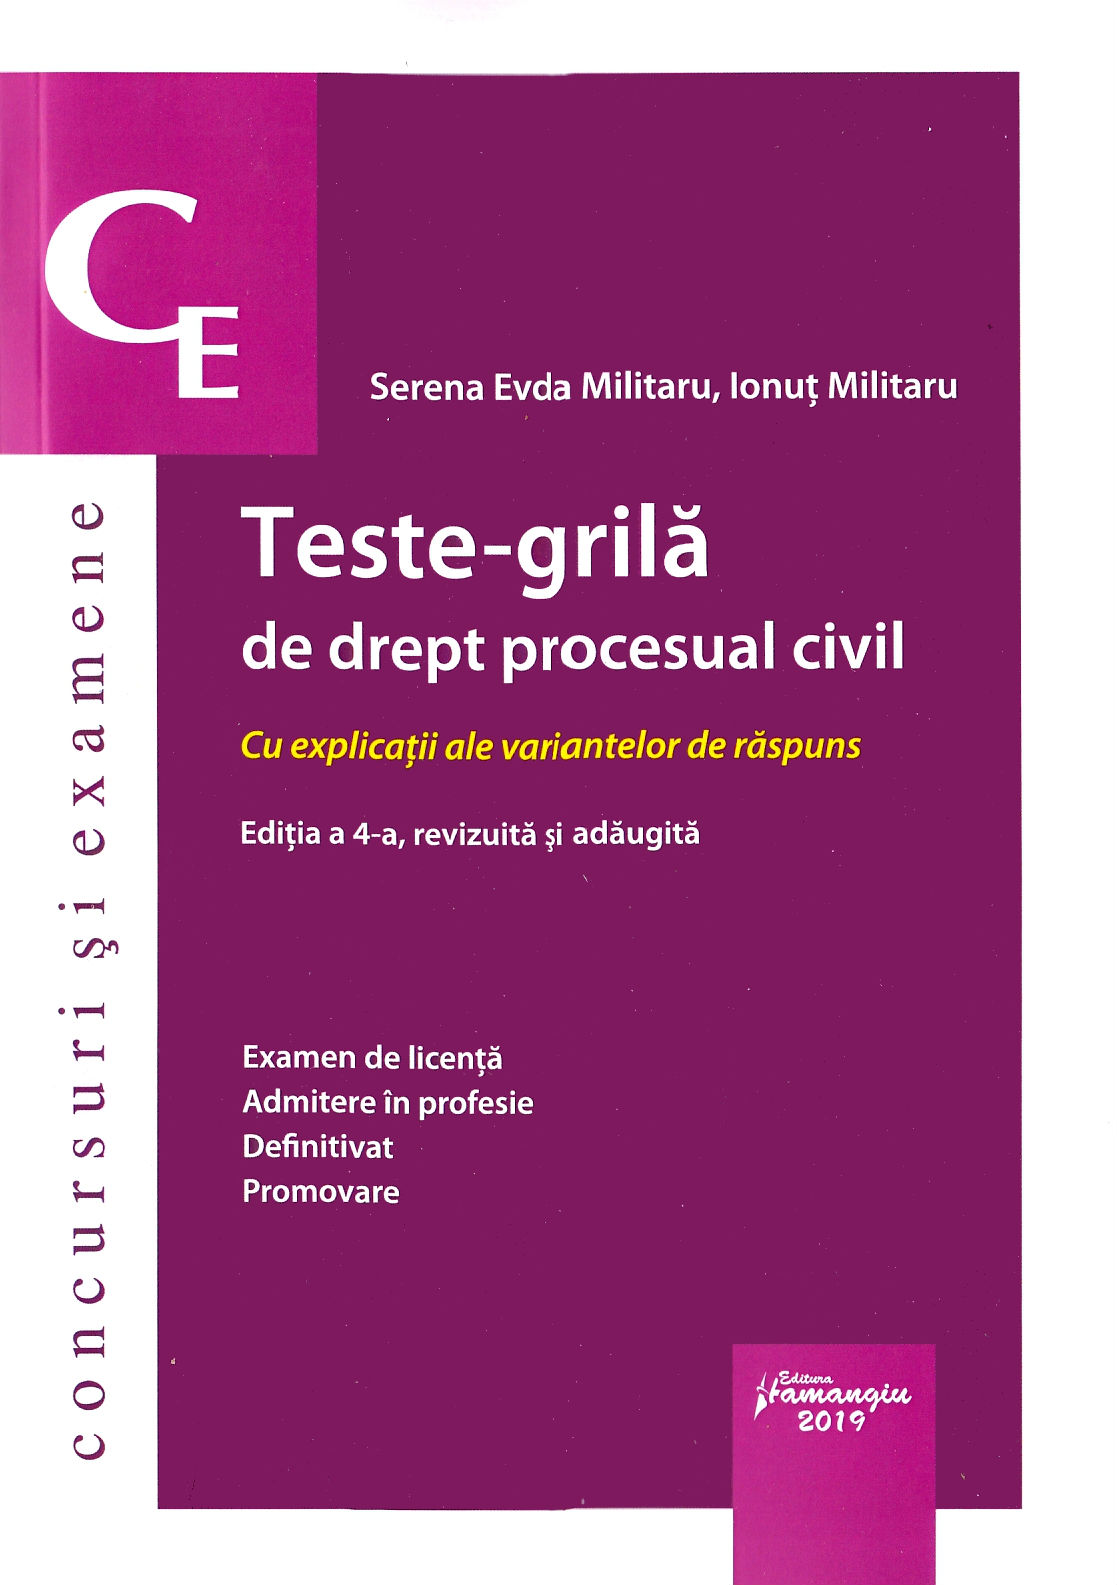 Teste-grila de drept procesual civil Ed.4 - Serena Evda Militaru, Ionut Militaru